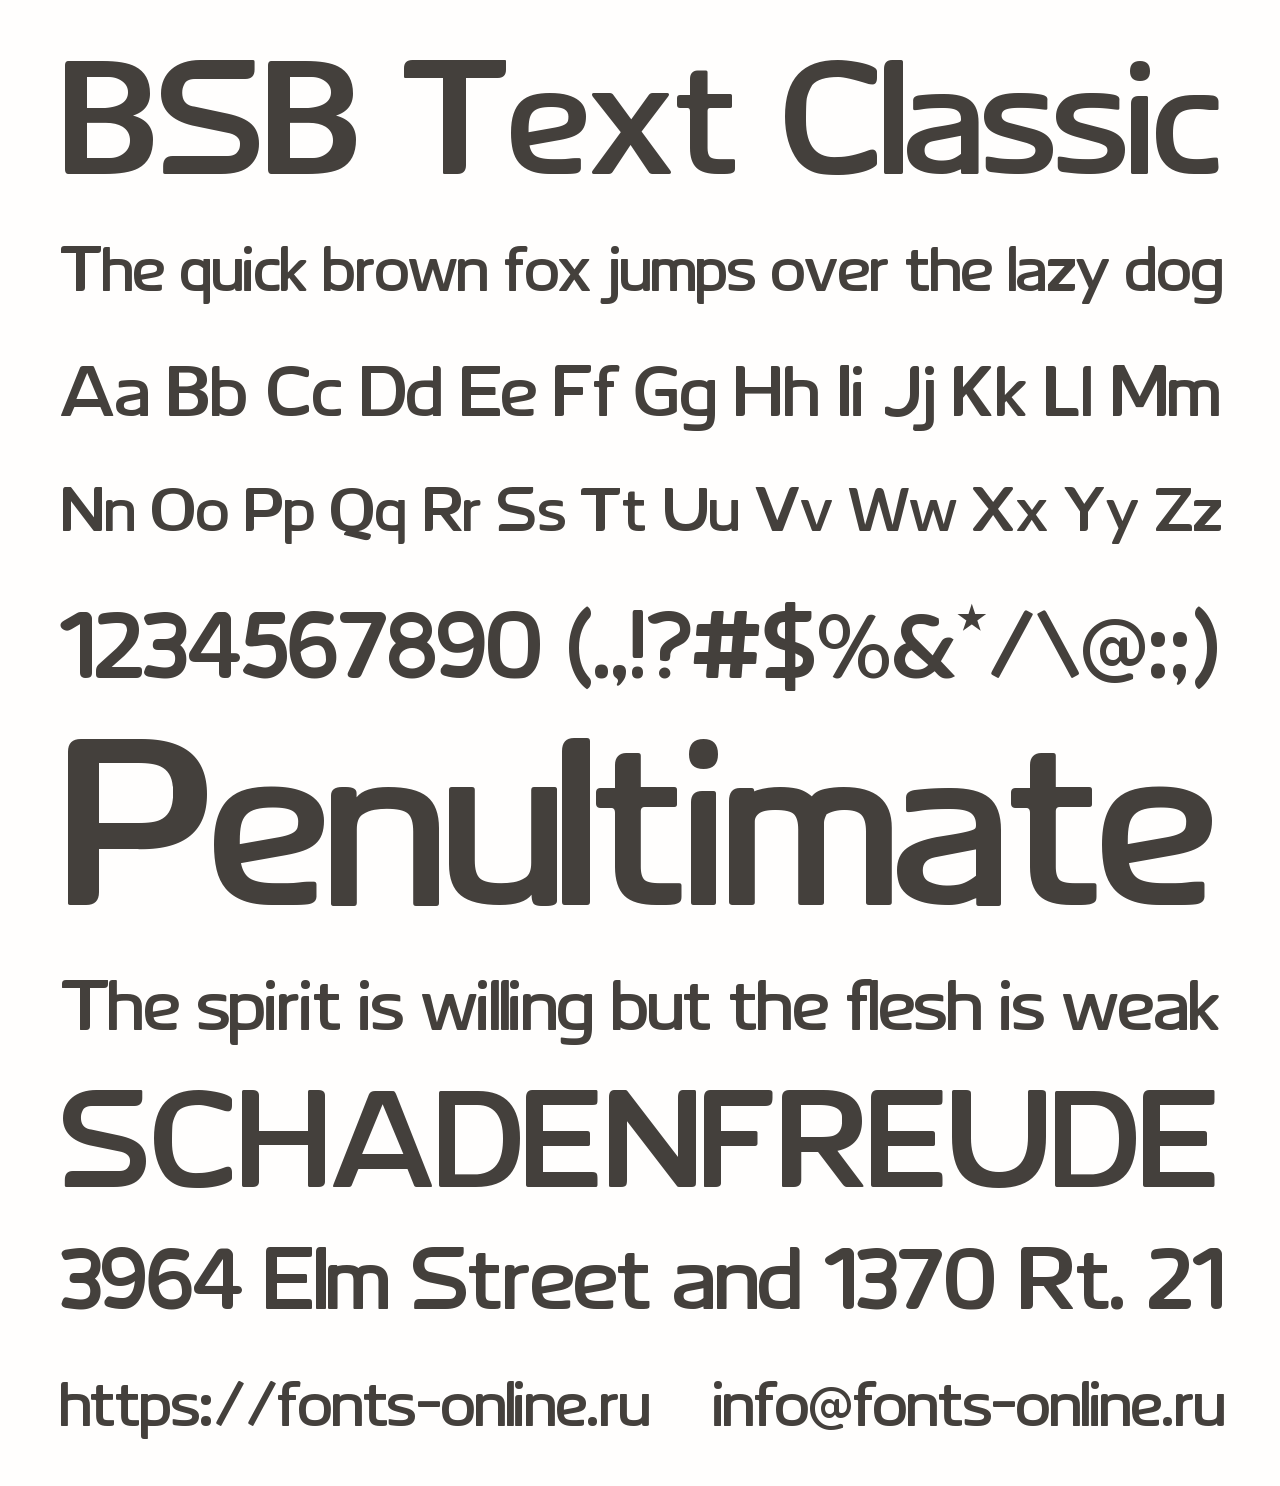 Шрифт BSB Text Classic